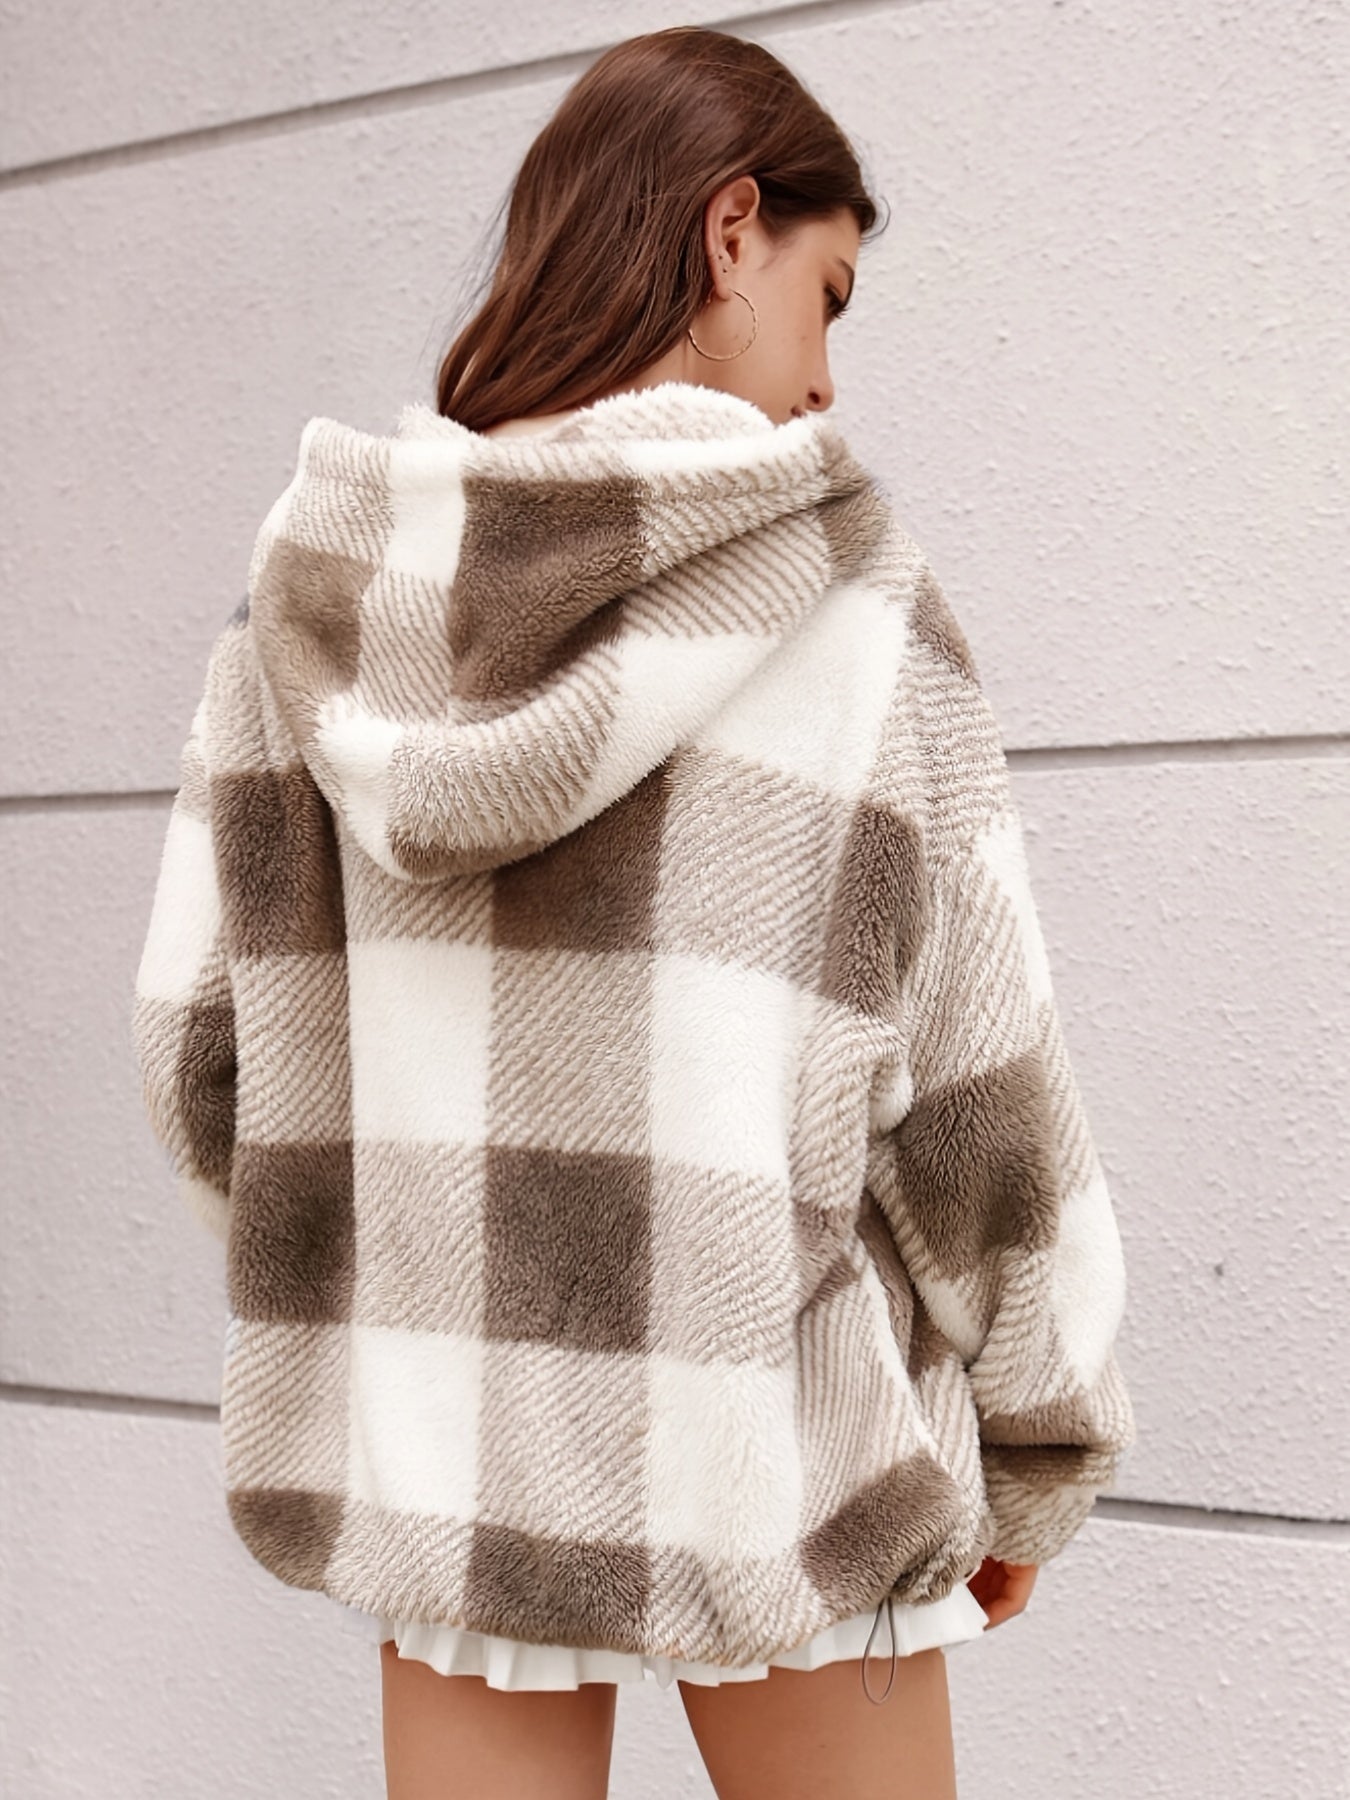 Plaid Hooded Teddy Coat, Elegant Zip Up Long Sleeve Winter Warm Outerwear, Women's Clothing